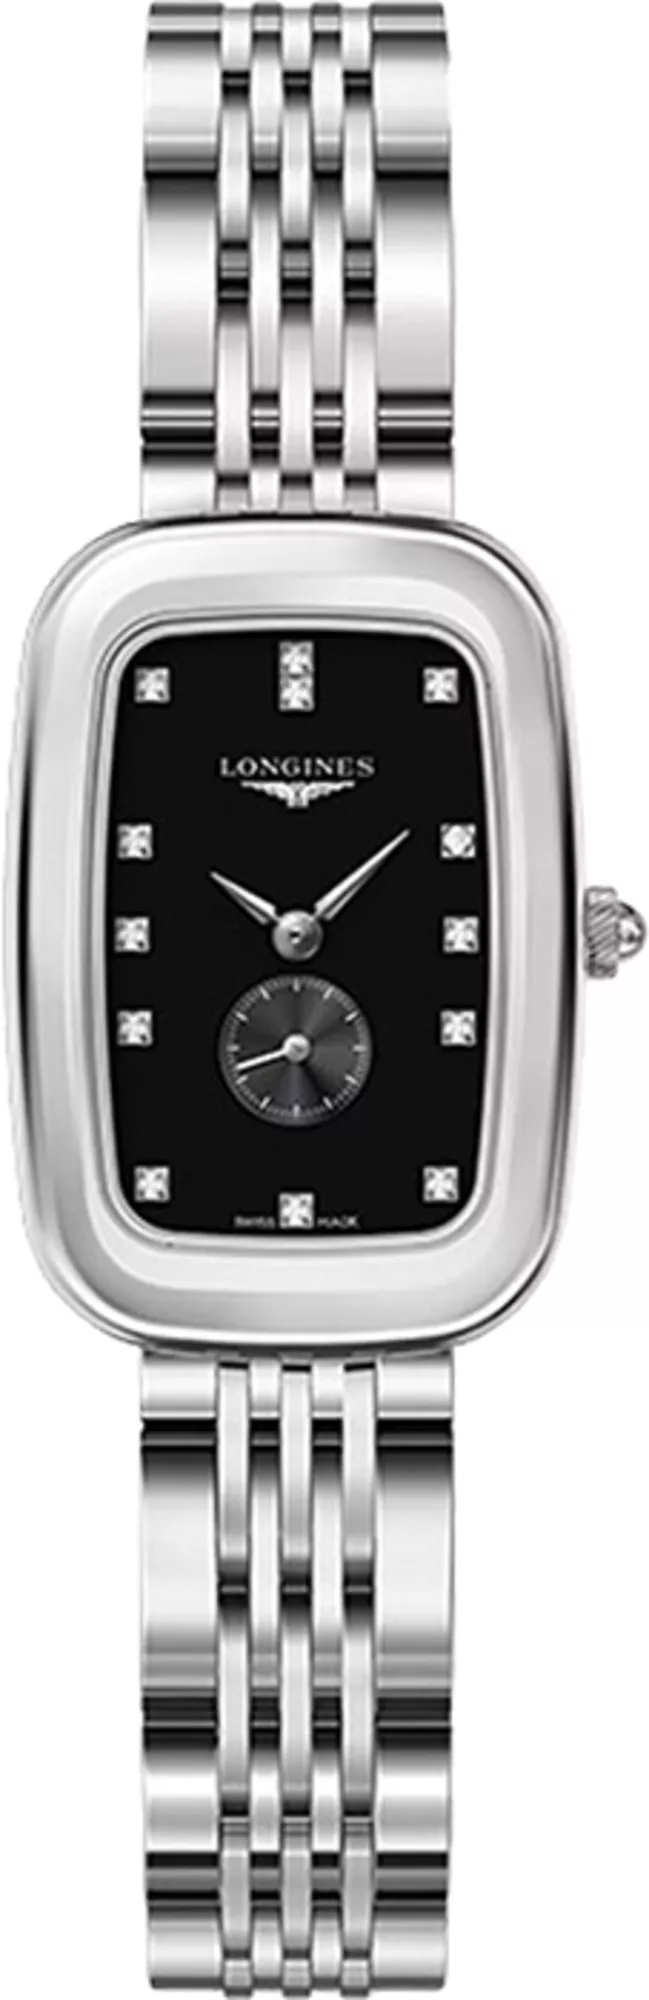 Часы Longines L6.141.4.57.6